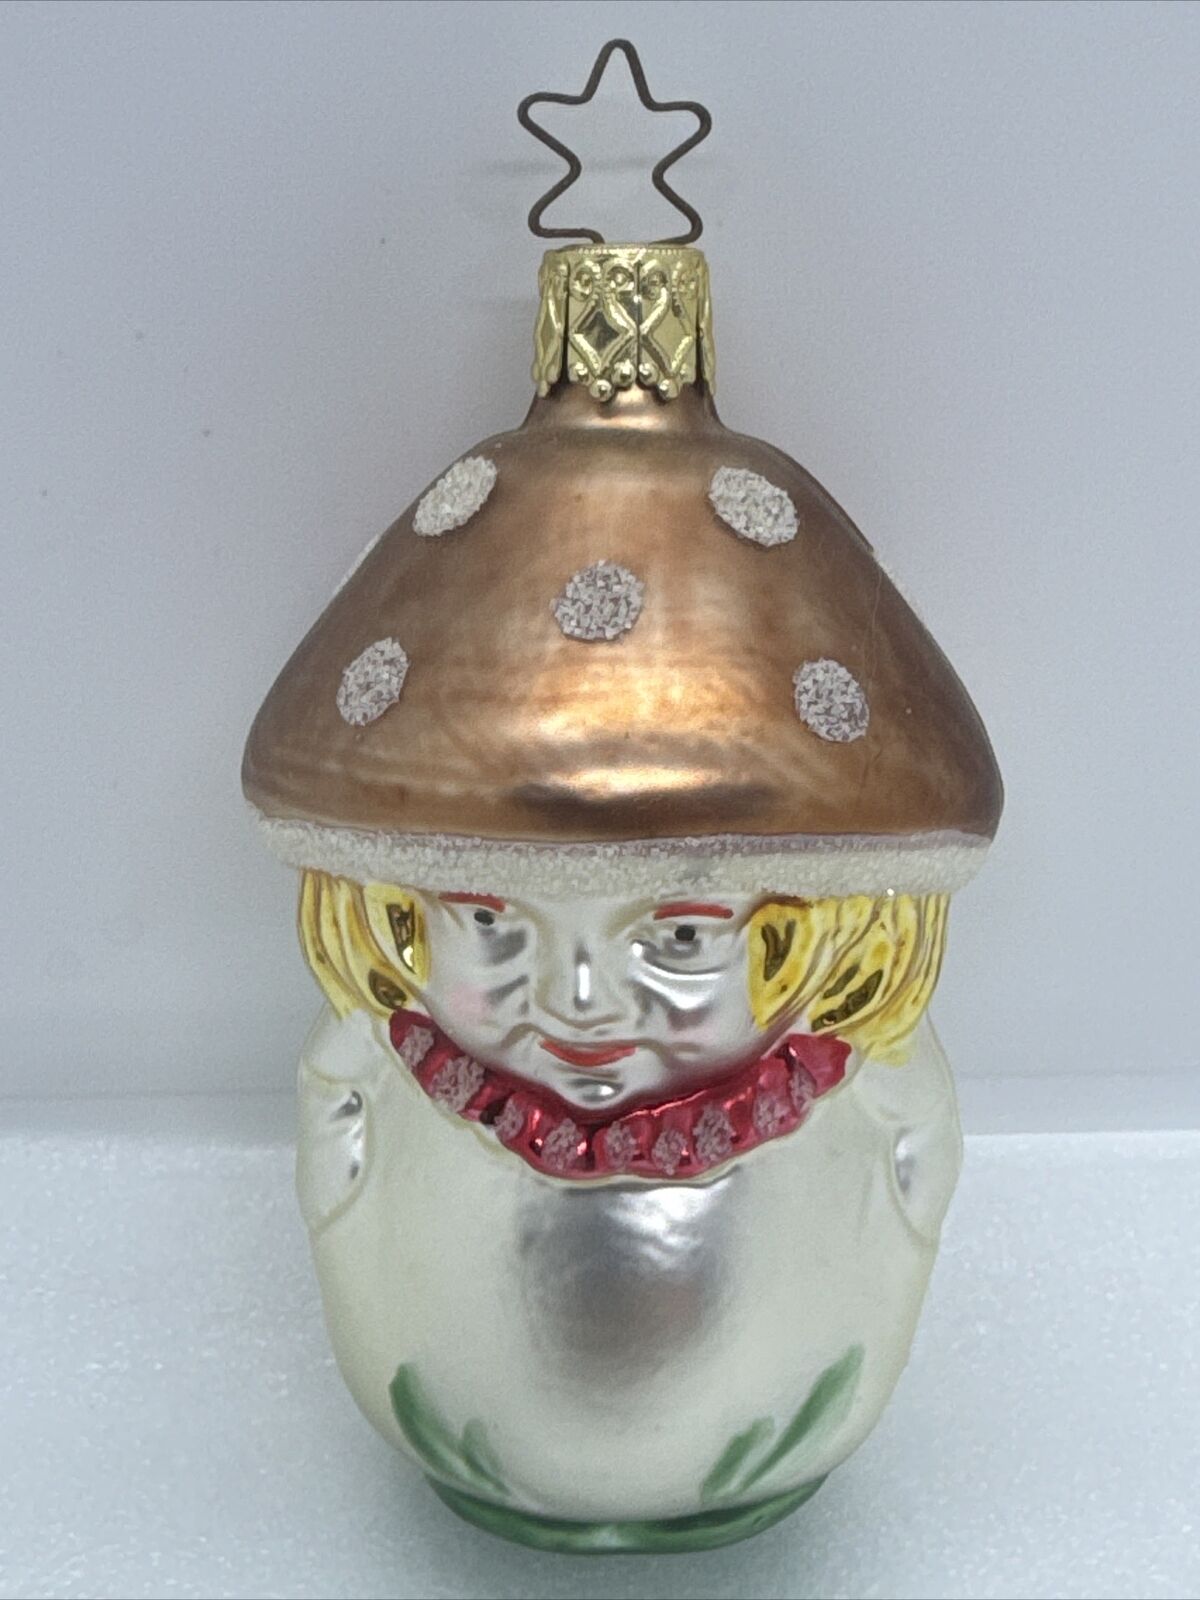 Old World Christmas Inge Glas Mushroom Toadstool Girl Ornament-Germany 4”